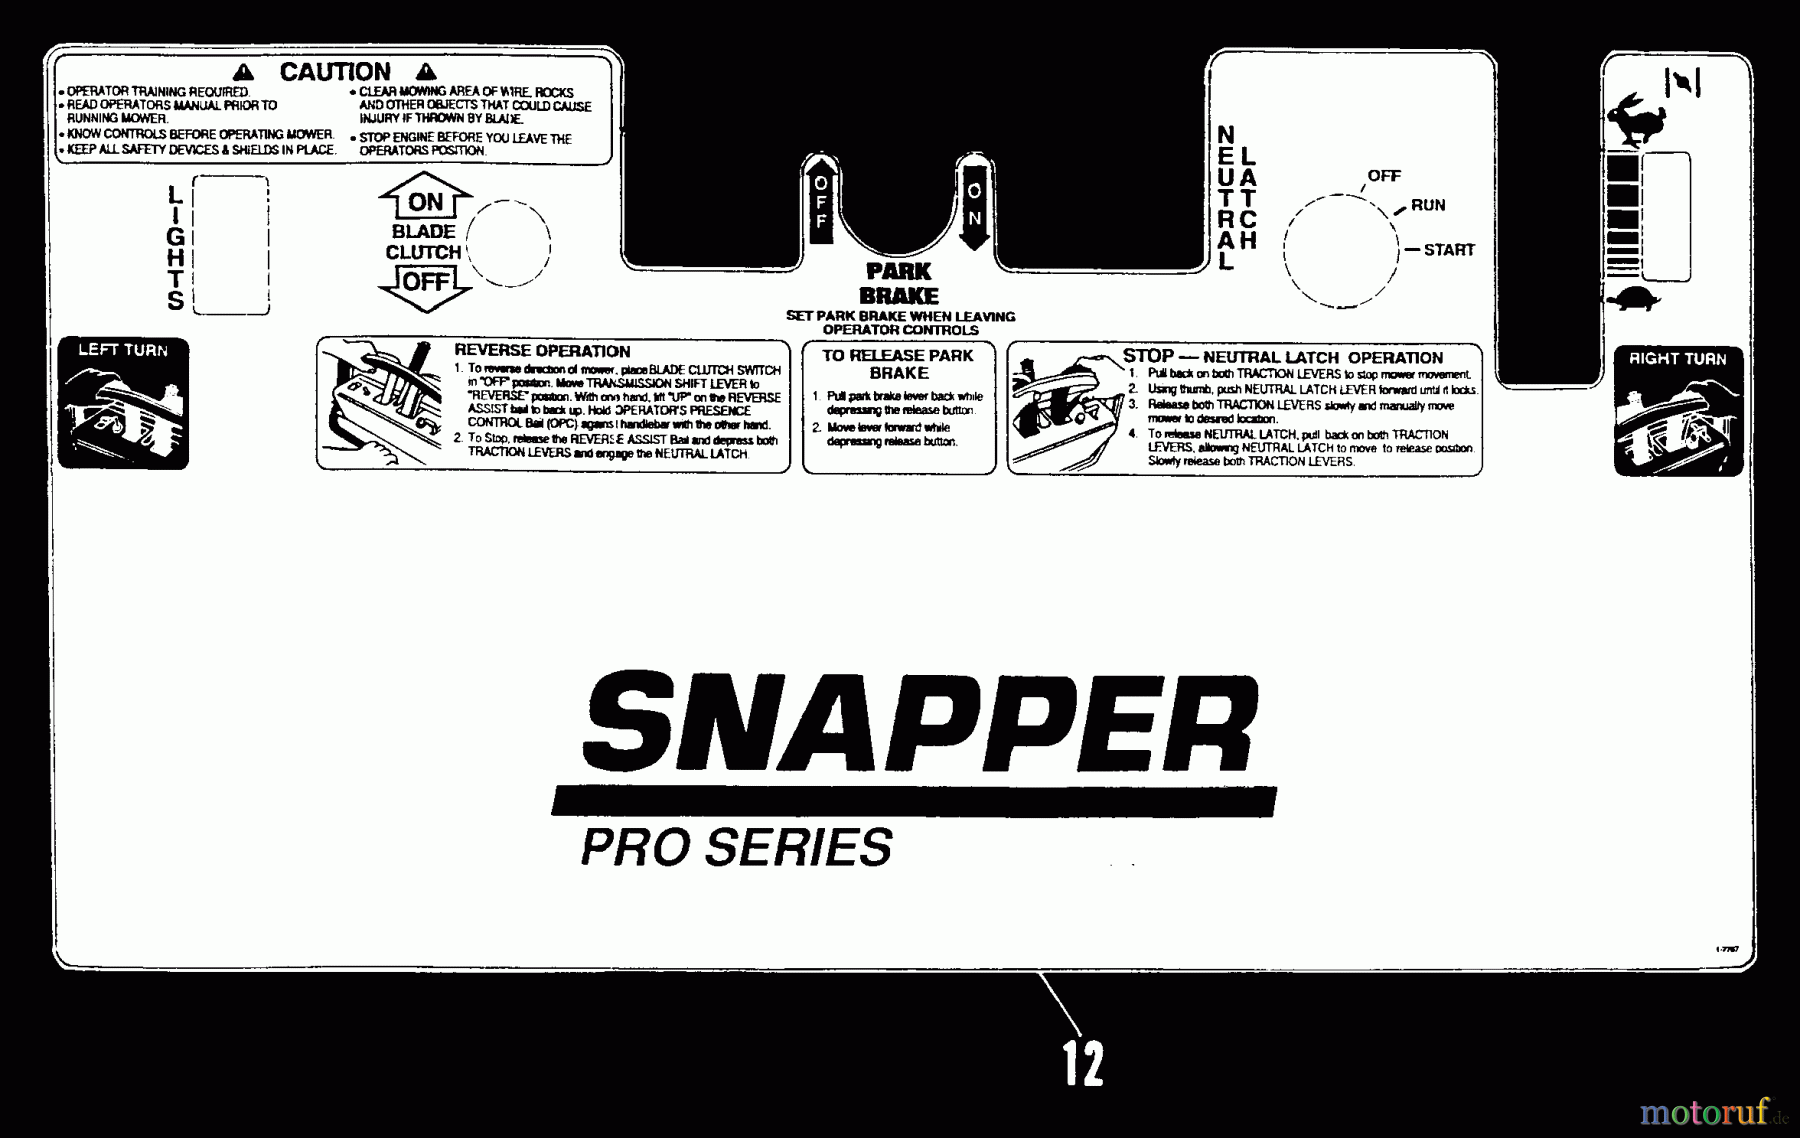  Snapper Rasenmäher für Großflächen PPU140KW - Snapper Wide-Area Walk-Behind Mower, 14 HP, Mid-Size Gear Drive, Series 0 Decal Kit (Part 2)